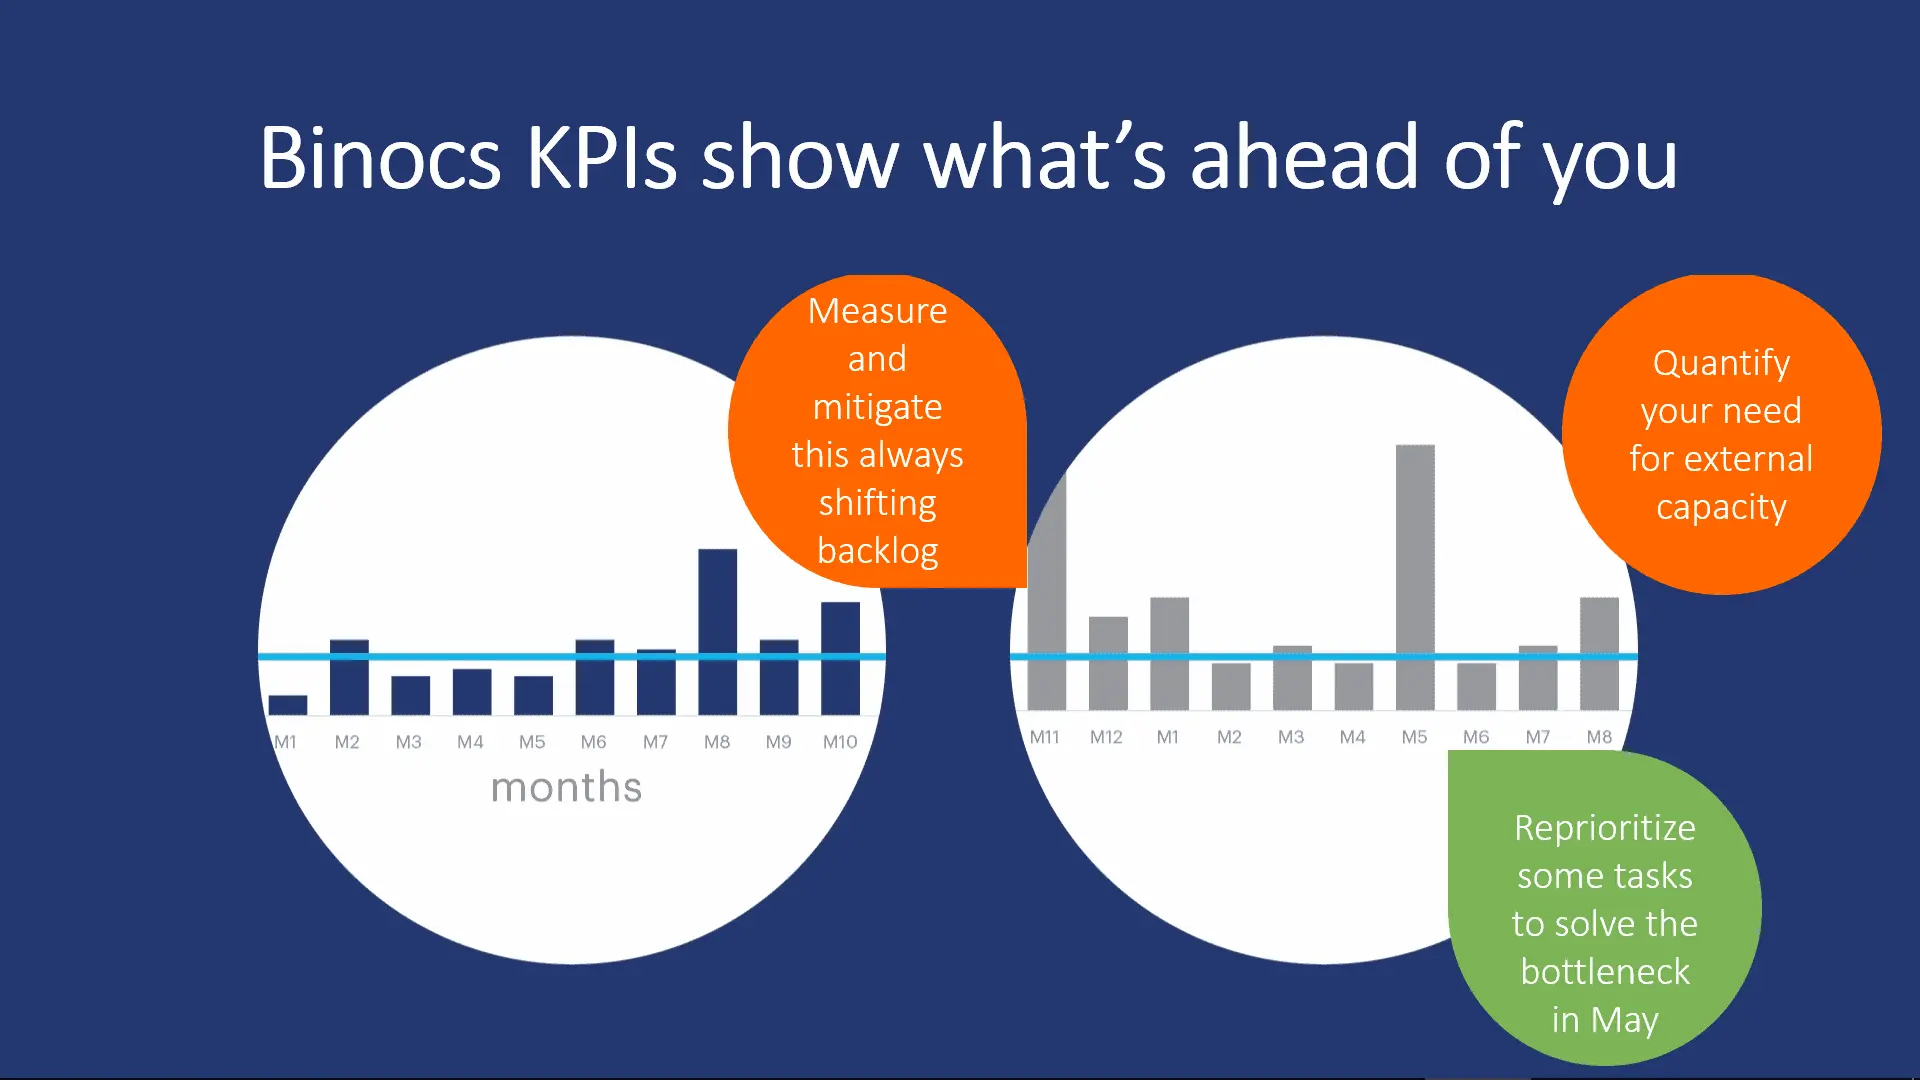 KPI (key performance indicators) strategic planning